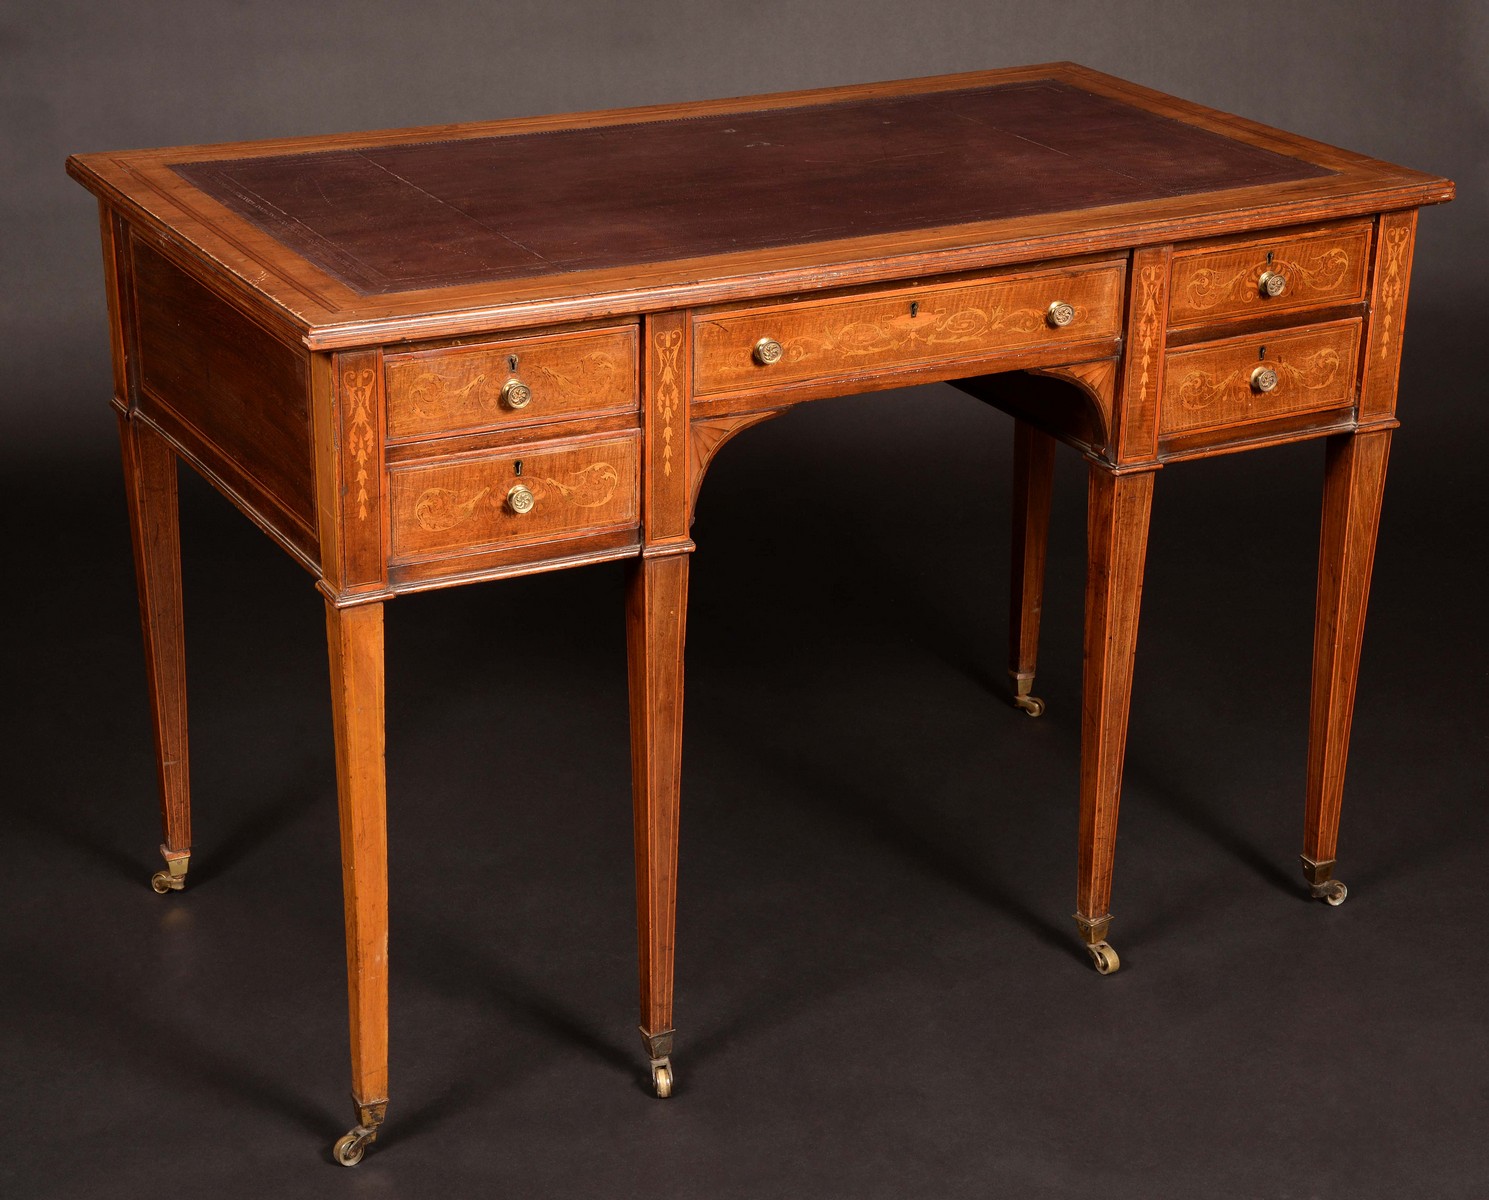 An Edwardian Sheraton Revival mahogany and marquetry desk,